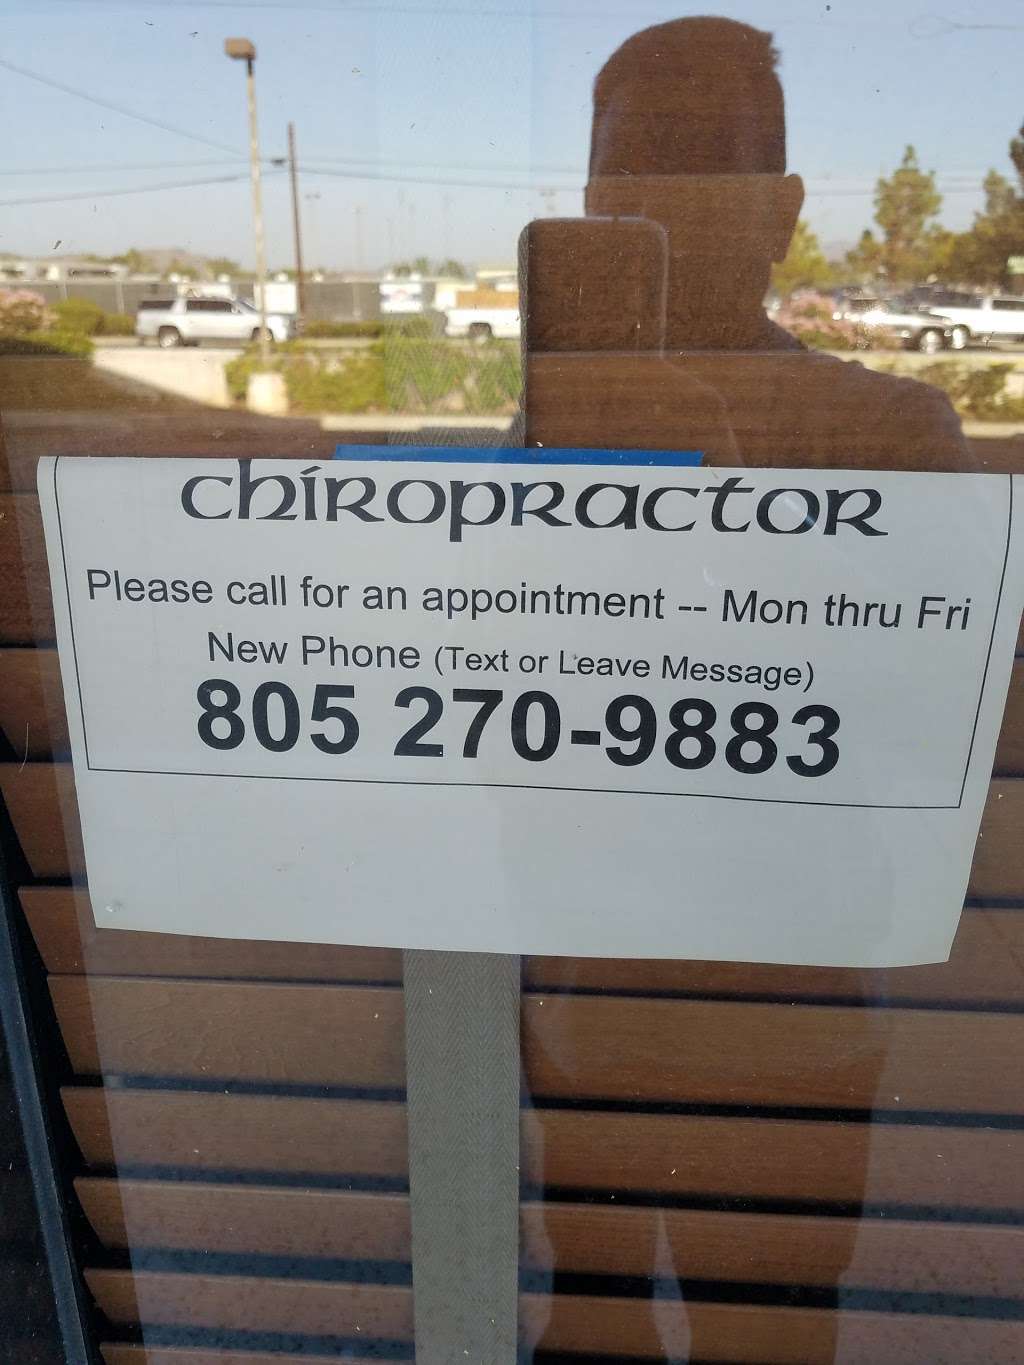 Davis Chiropractic: Davis Matt DC | 2220 N Moorpark Rd # 102, Thousand Oaks, CA 91360 | Phone: (805) 495-1975